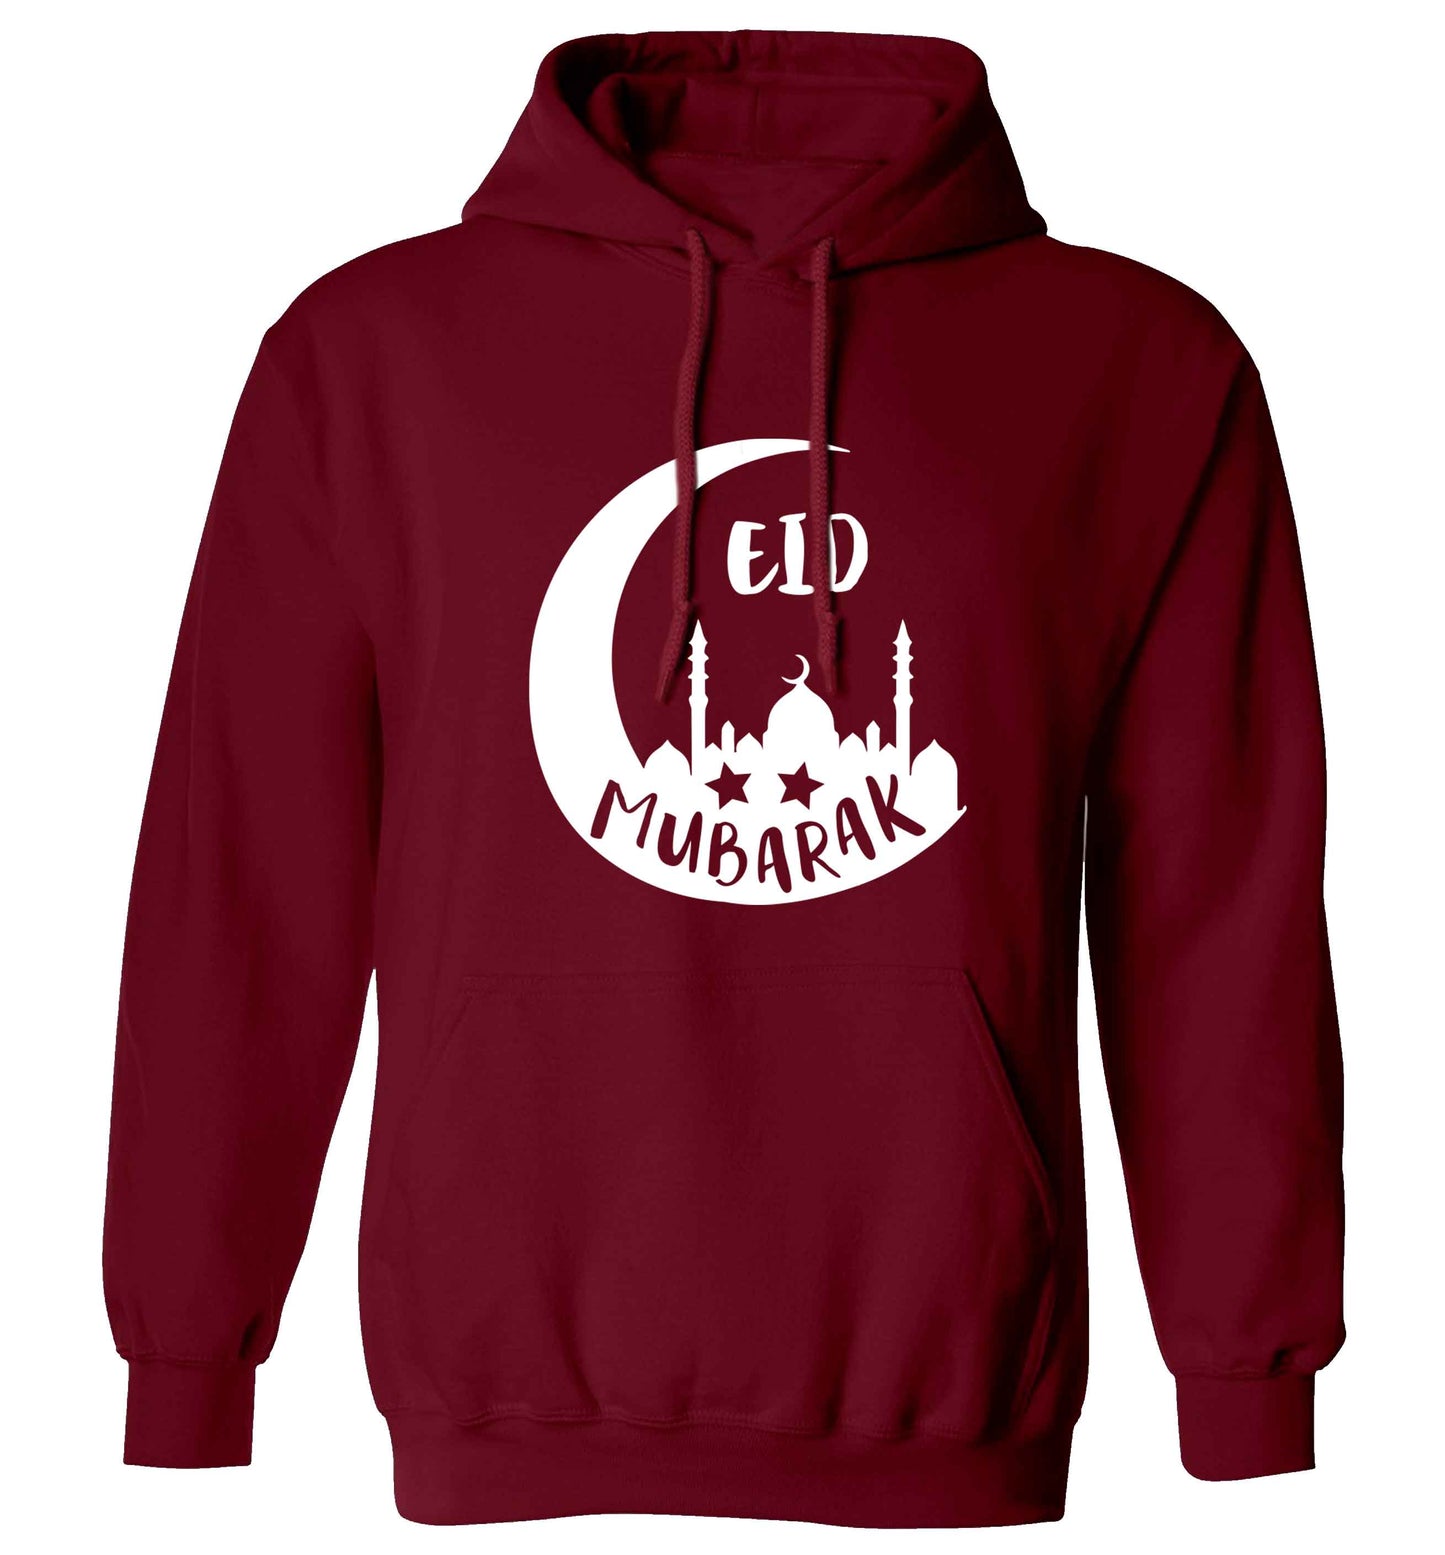 Eid mubarak adults unisex maroon hoodie 2XL